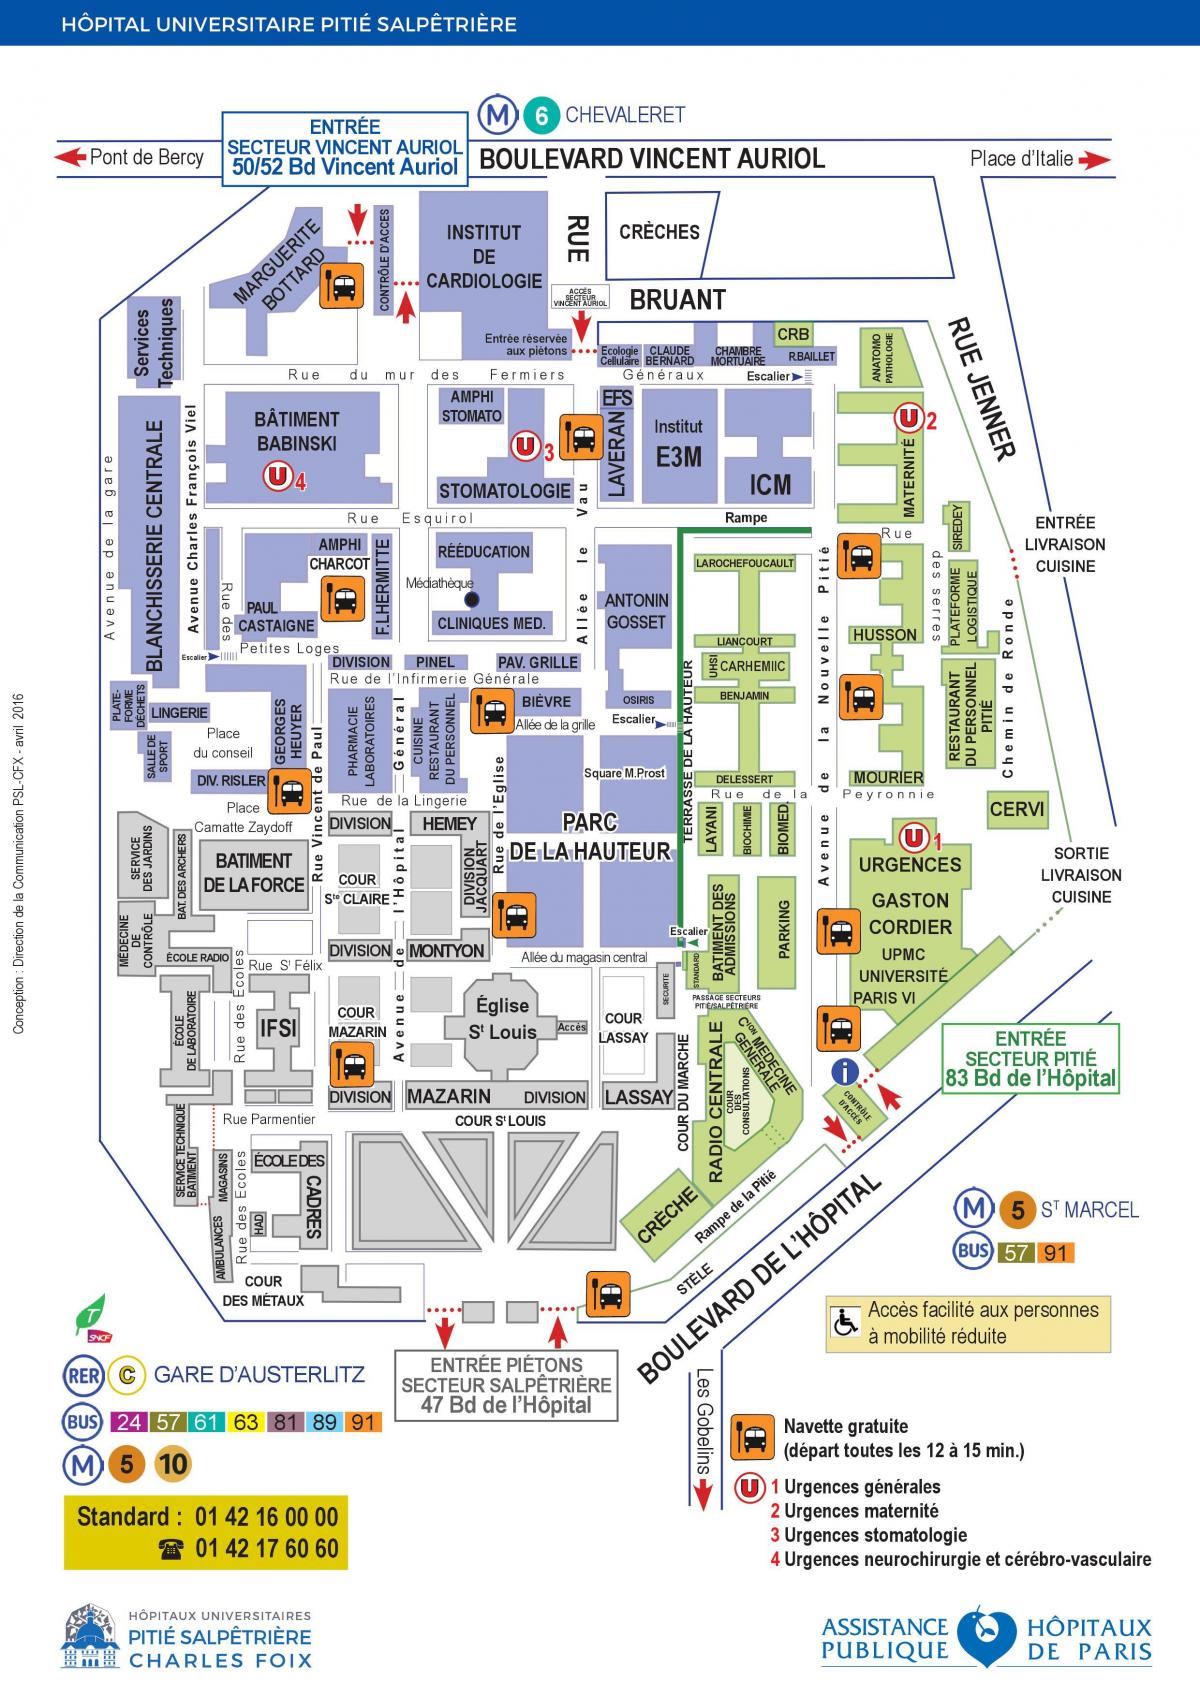 Map of Pitie Salpetriere hospital